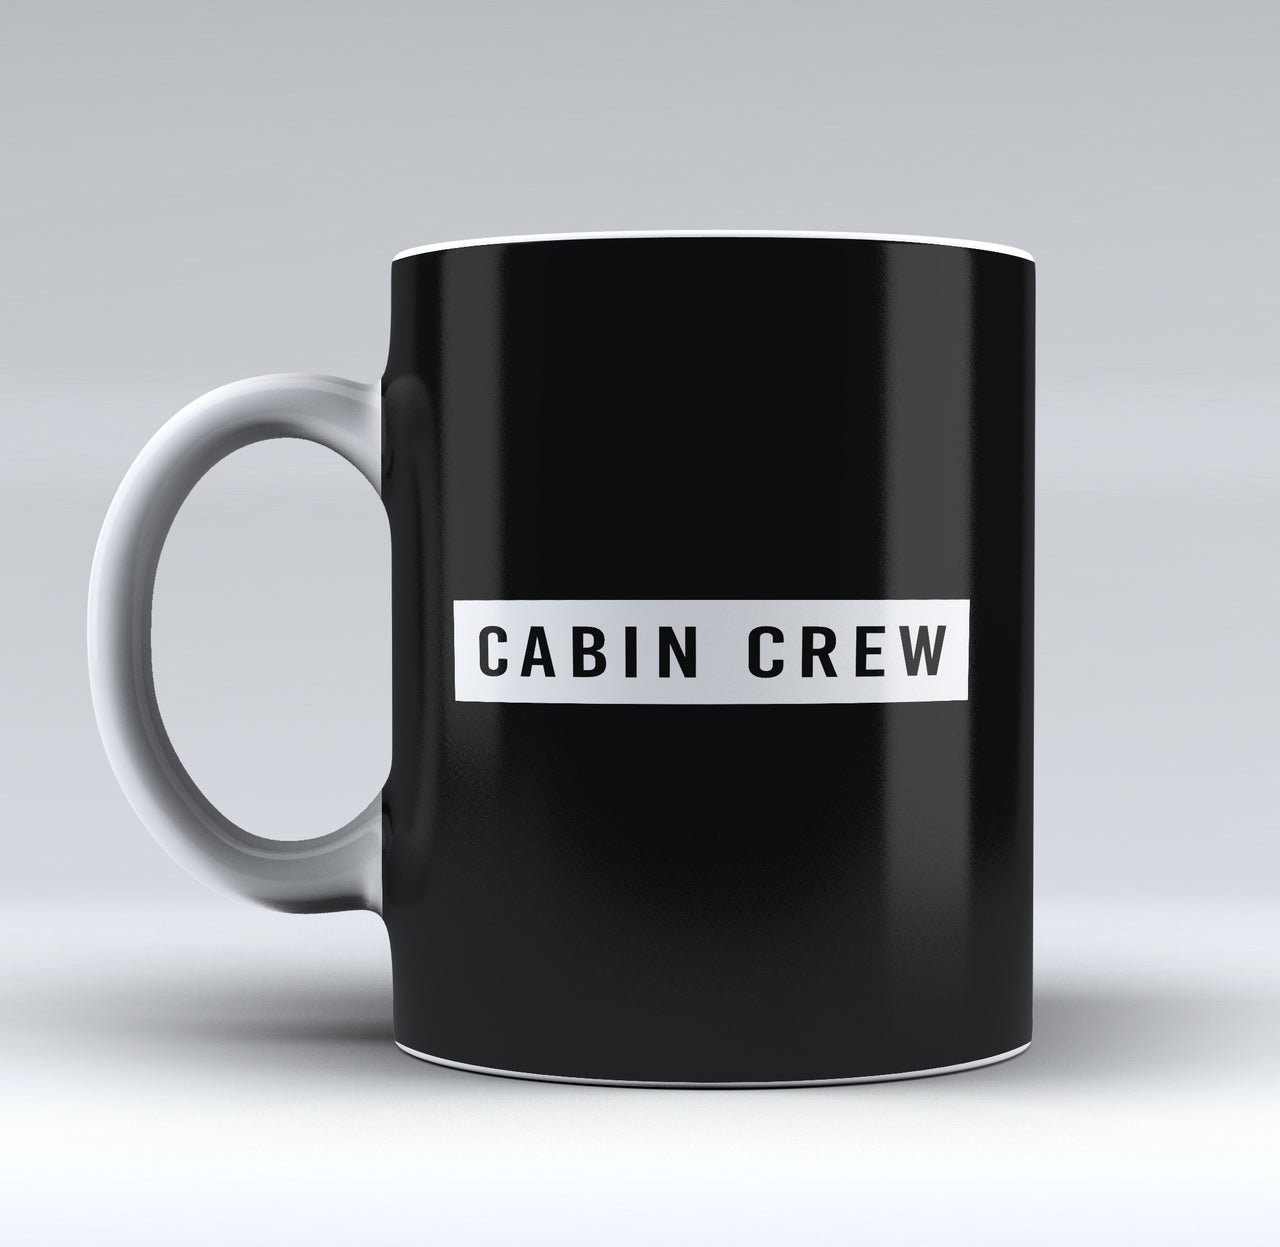 Cabin Crew Text Designed Mugs